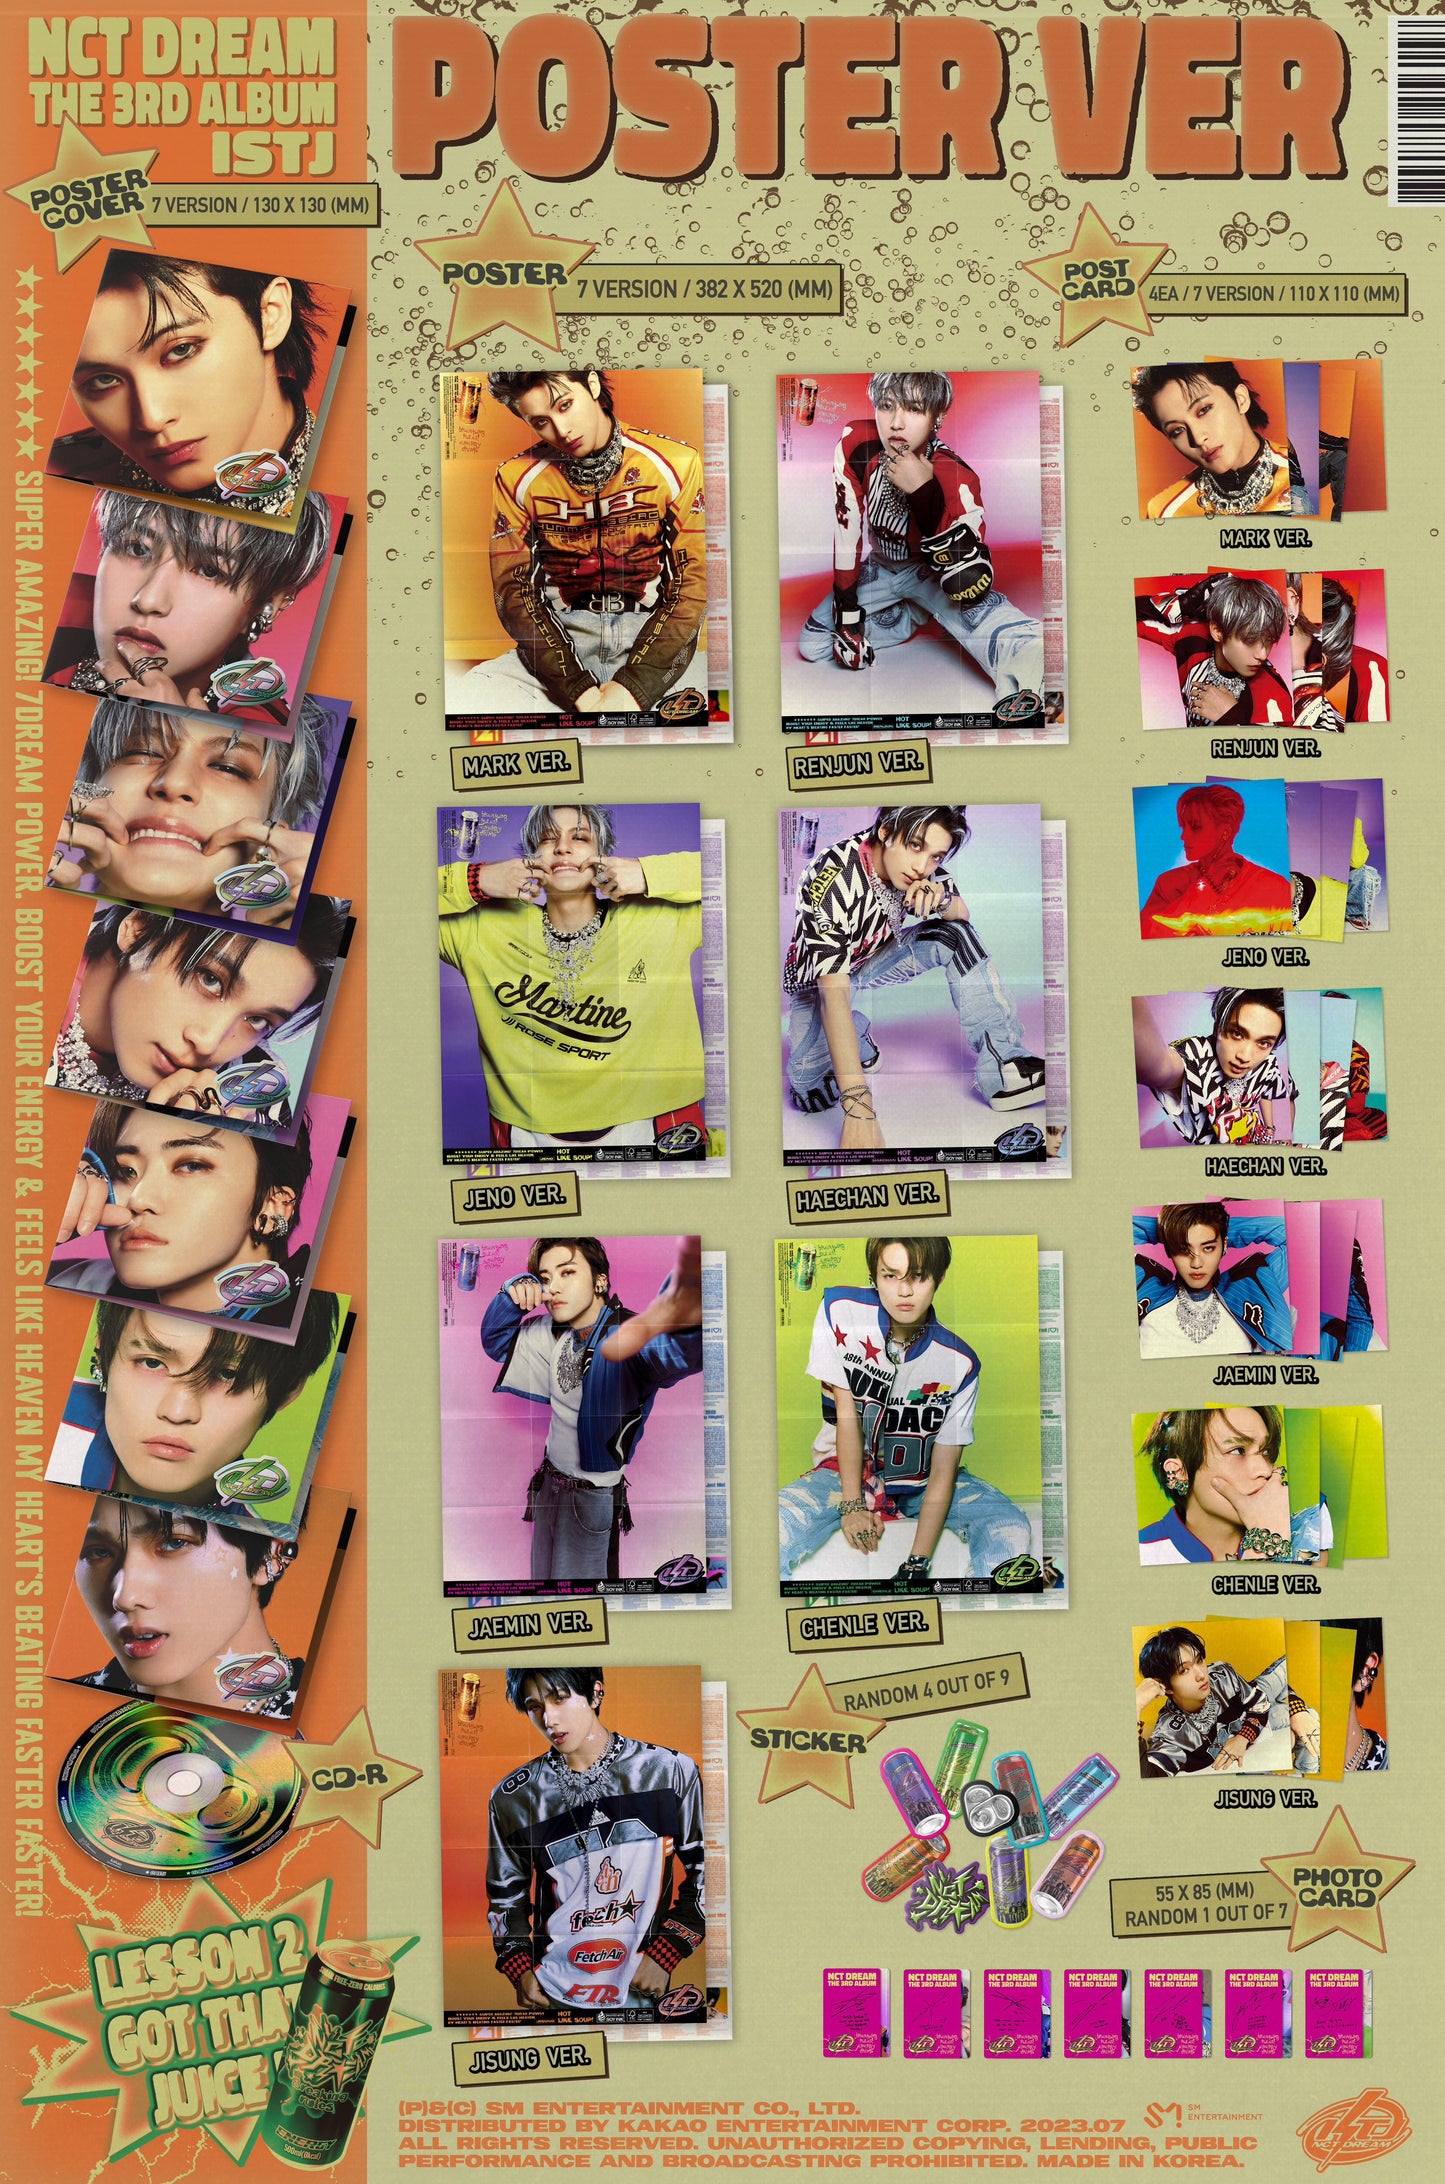 NCT DREAM - 3rd Full Album 'ISTJ' (Poster Version)